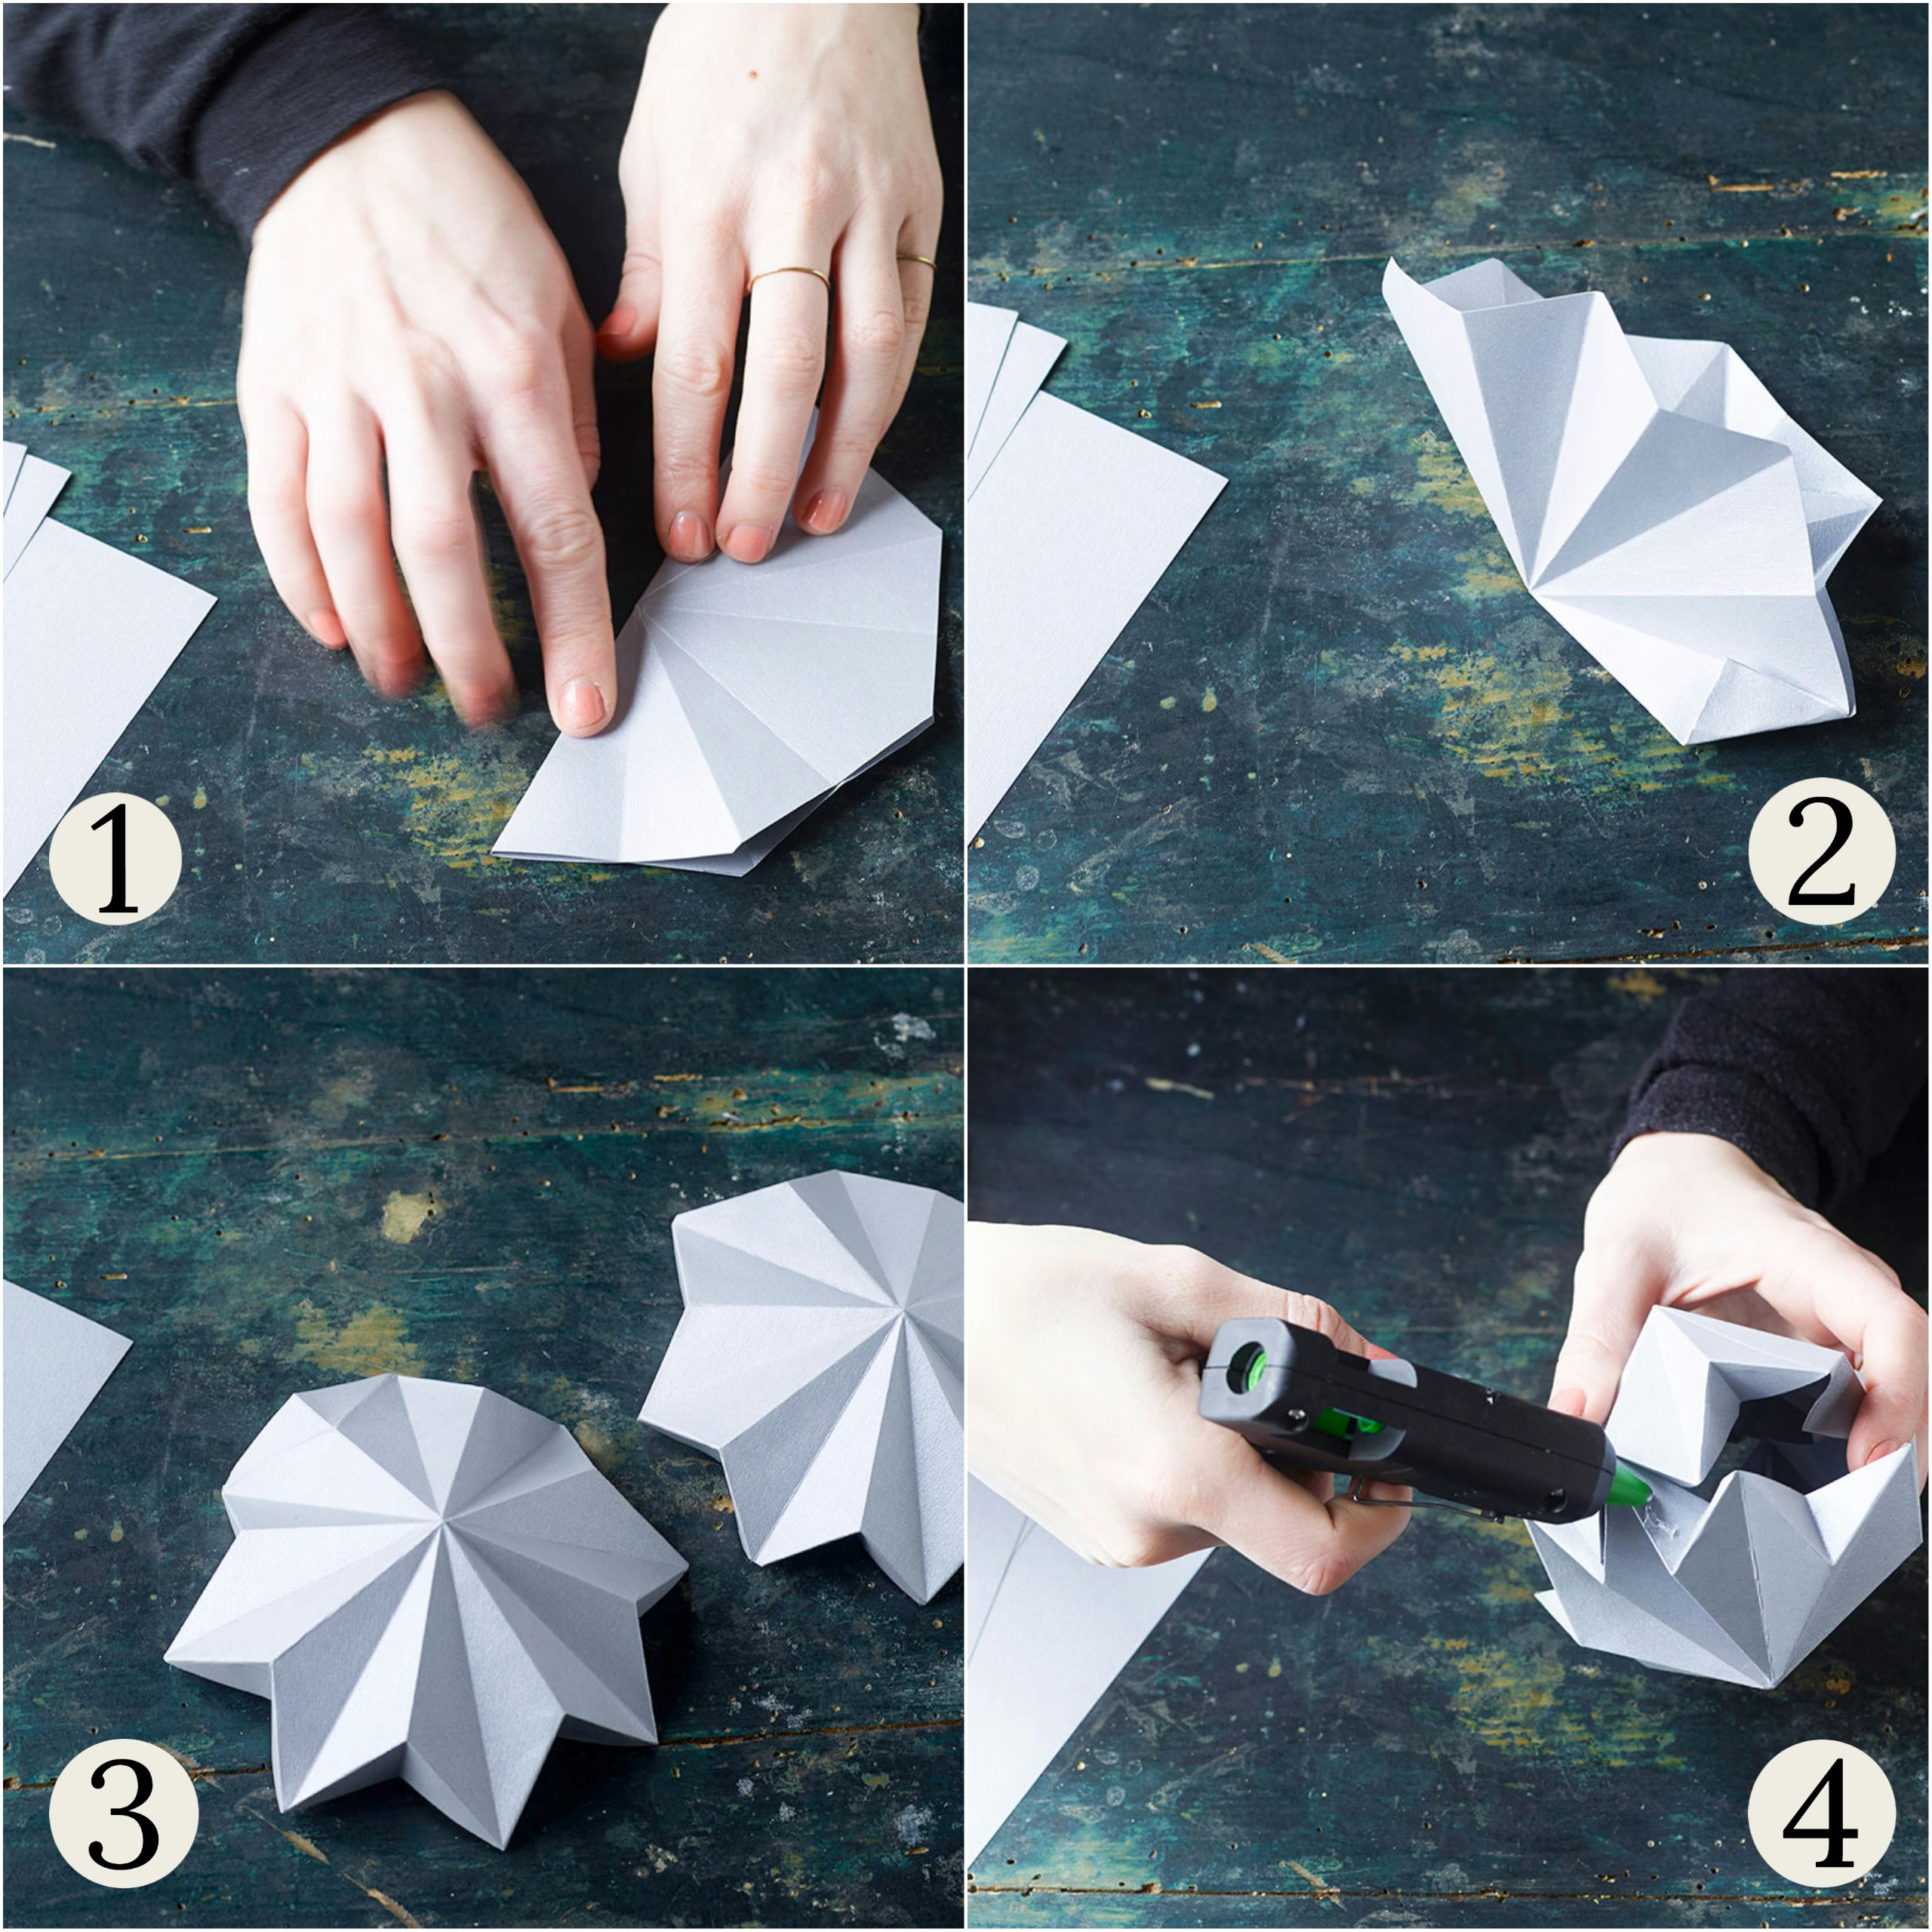 Guide til diamant-origami trin for trin